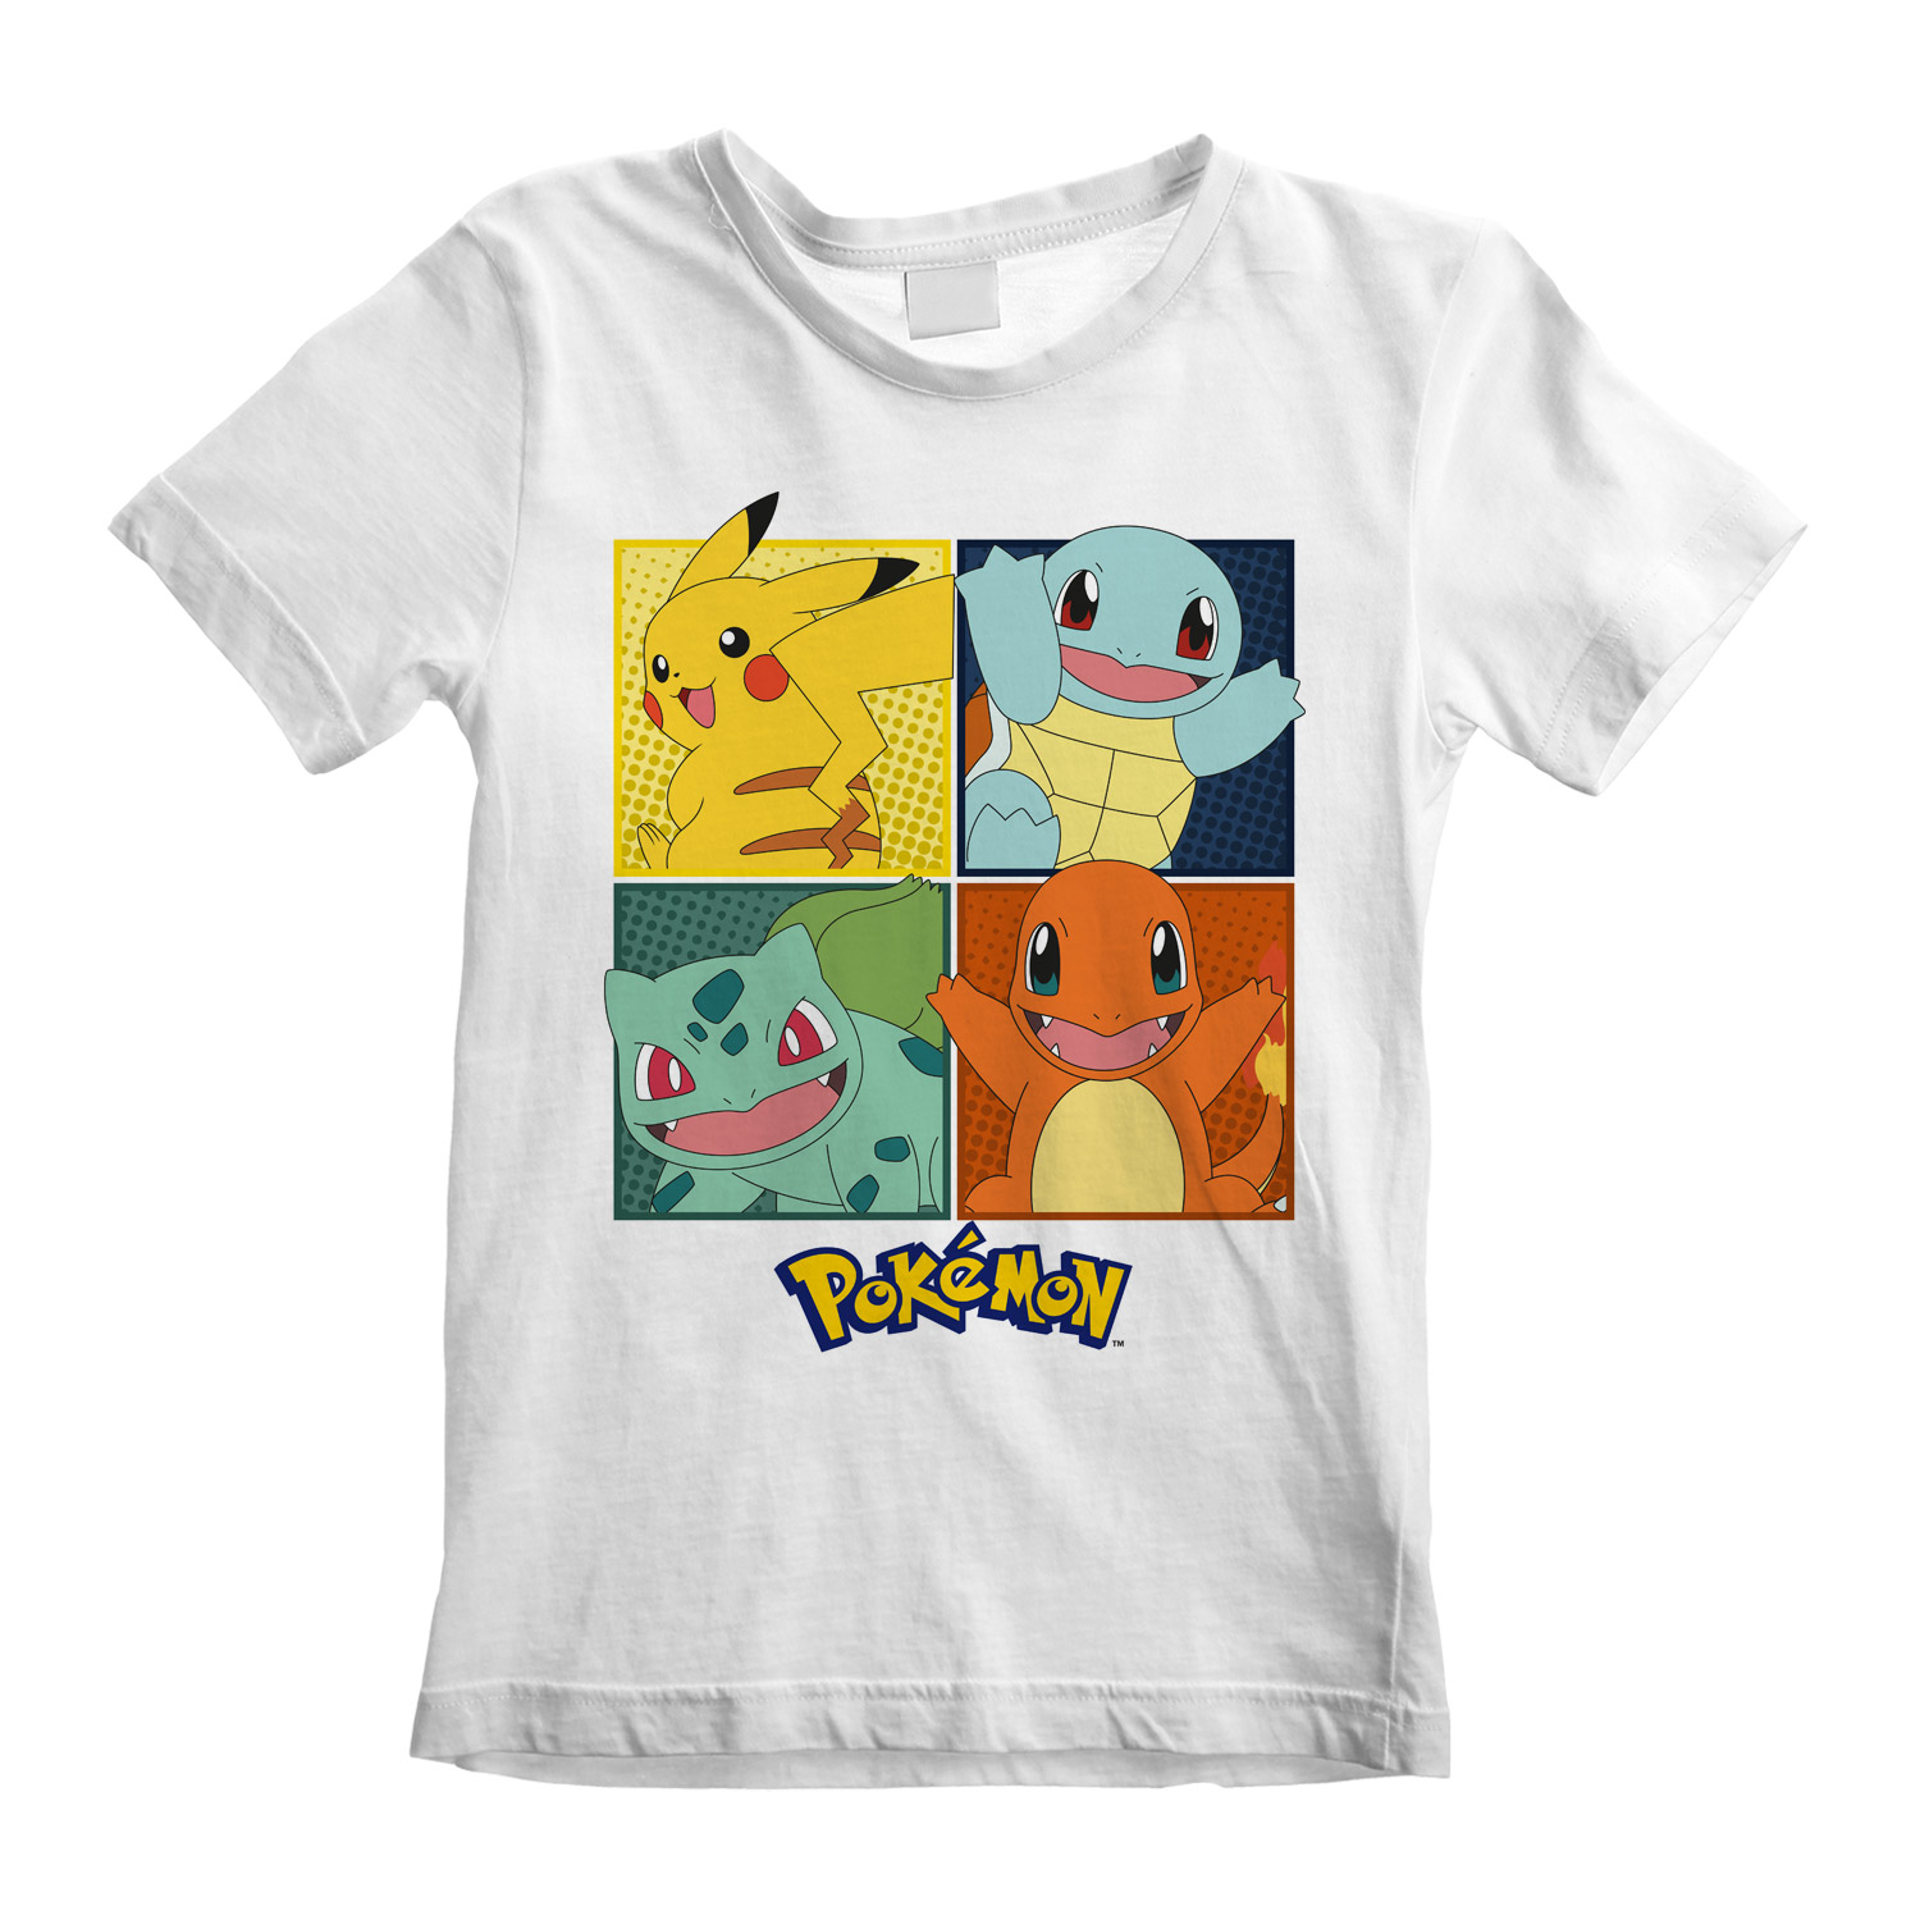 Nintendo - T-shirt Enfant Blanc Pokémon Carrés - 3-4 ans